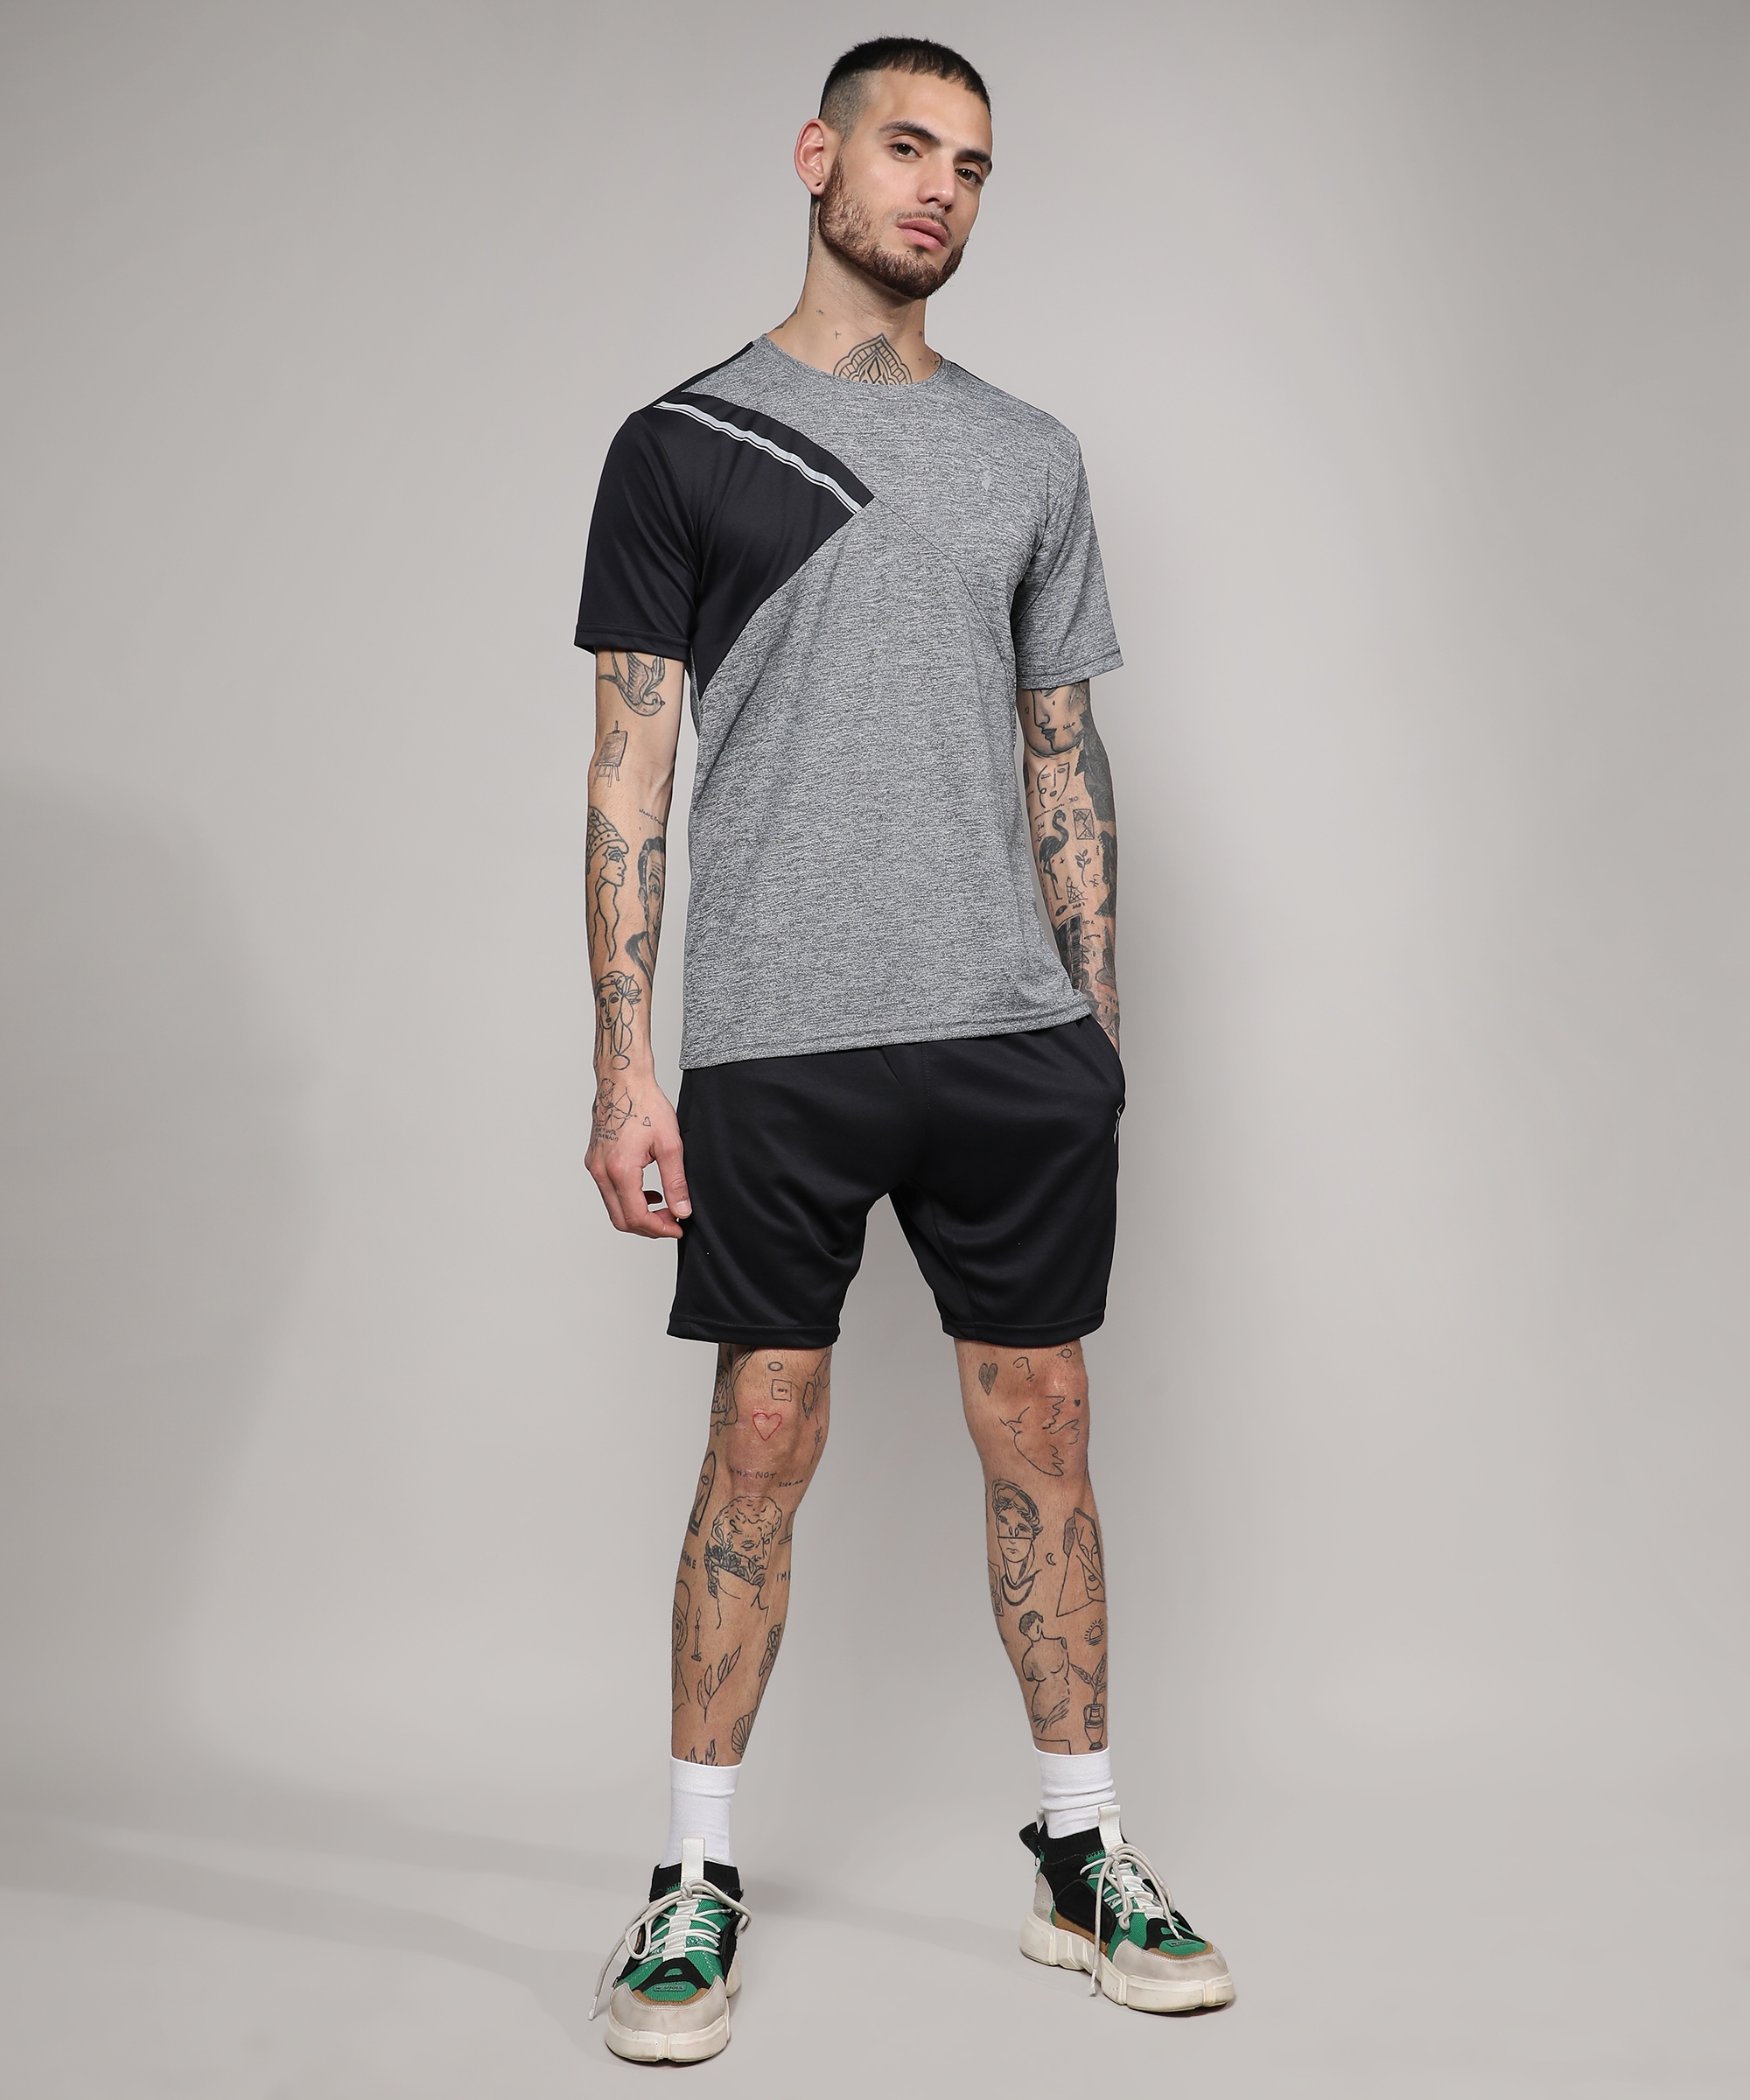 Men's Charcoal Grey and Jet Black Colourblock Activewear T-Shirt